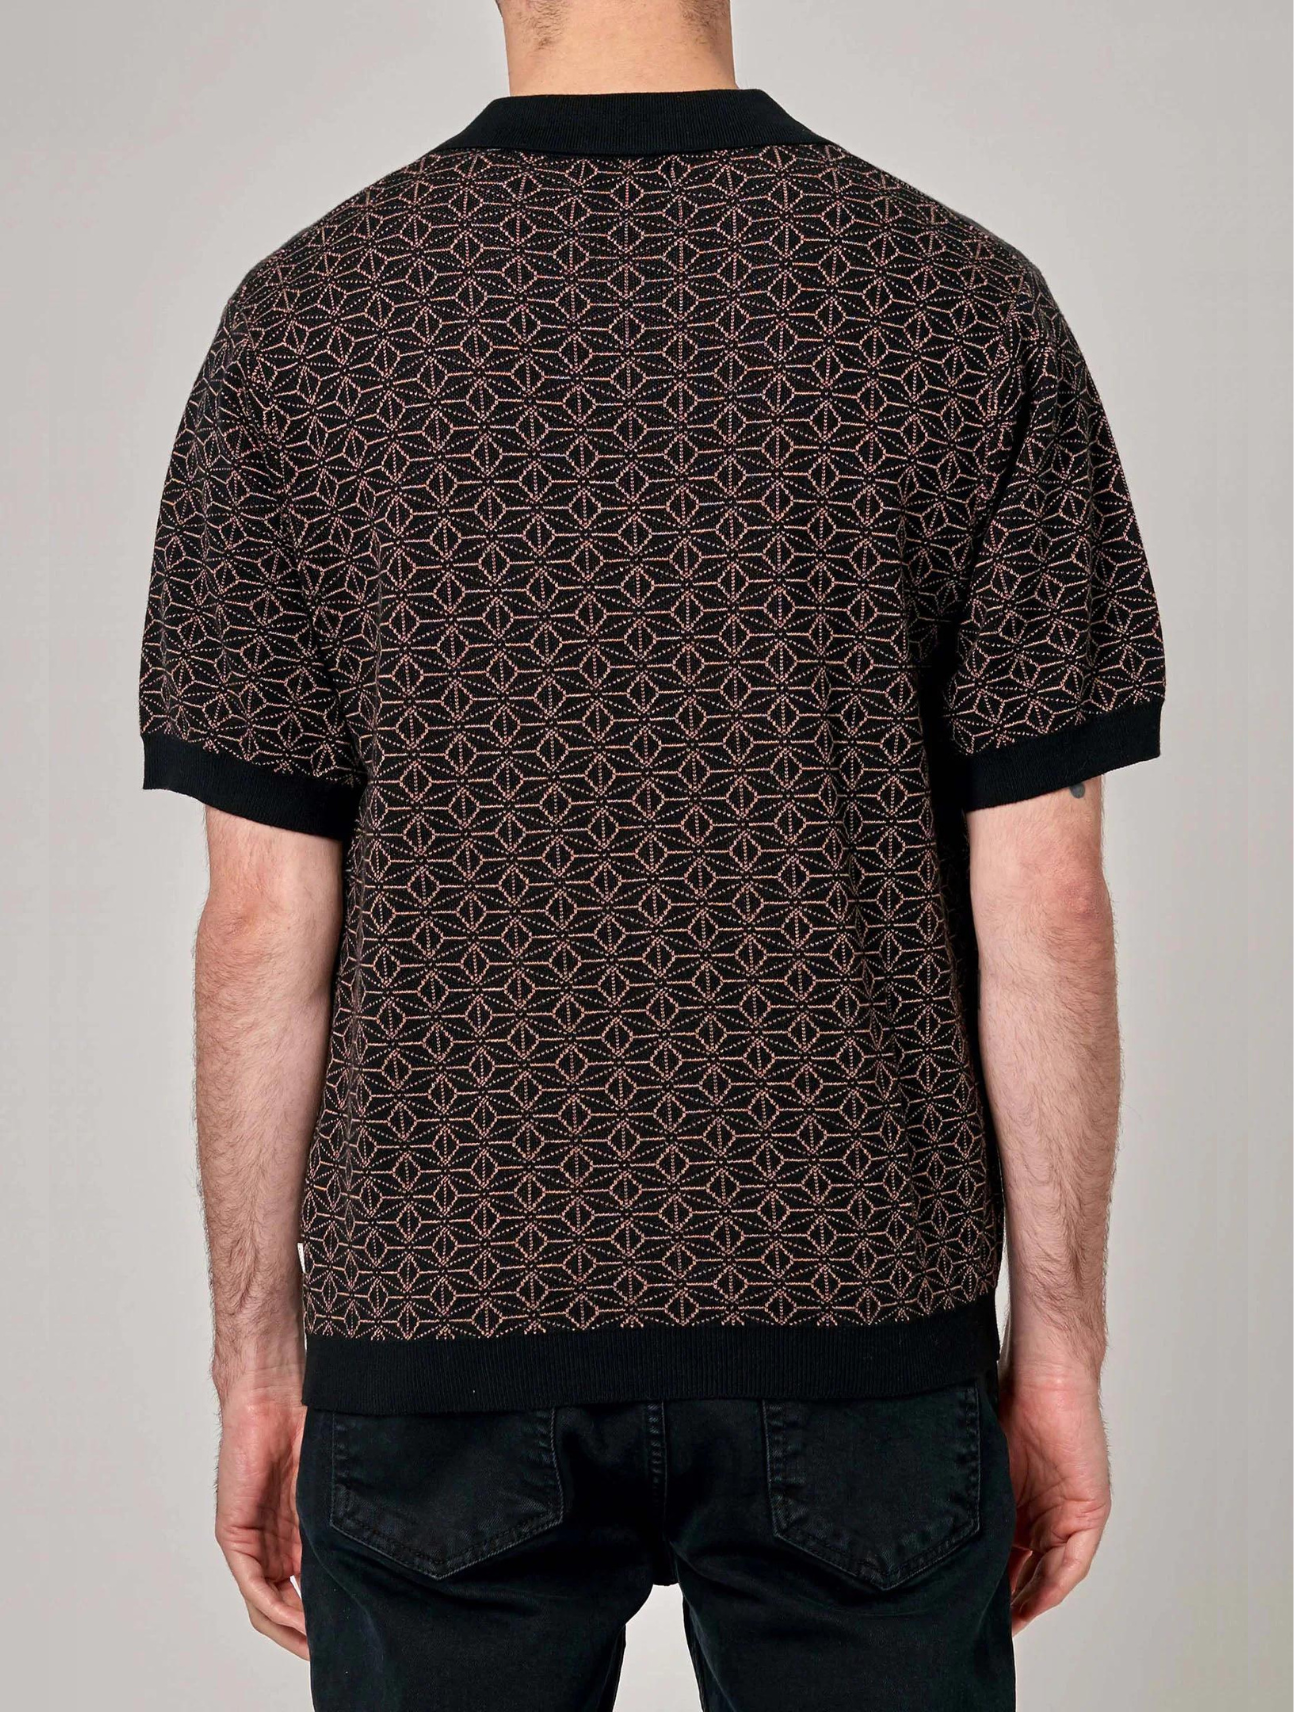 Bowler Pattern Knit Shirt